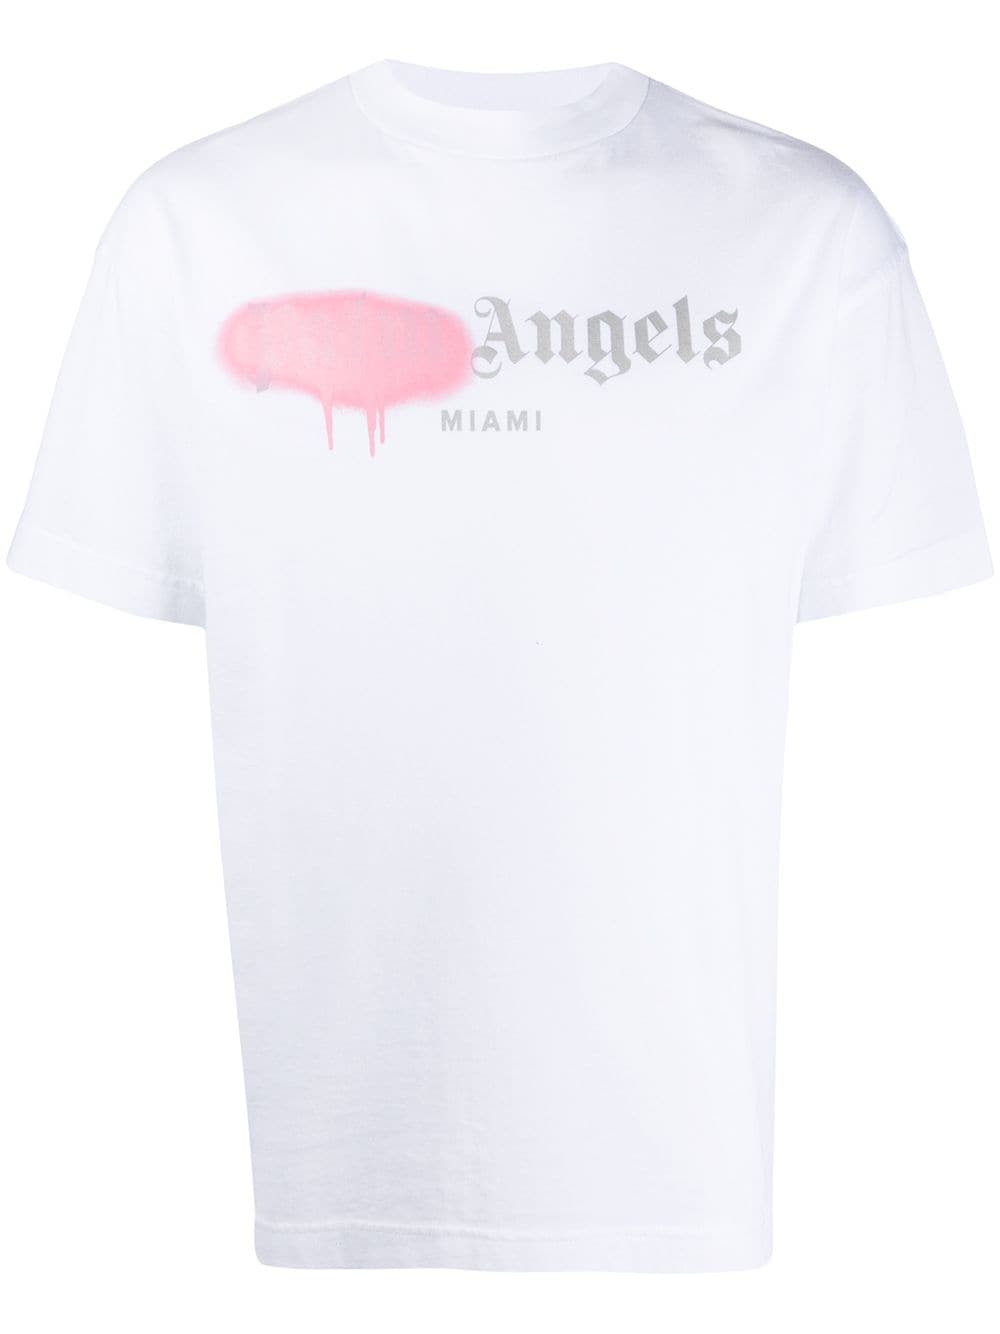 palm angels spray paint shirt